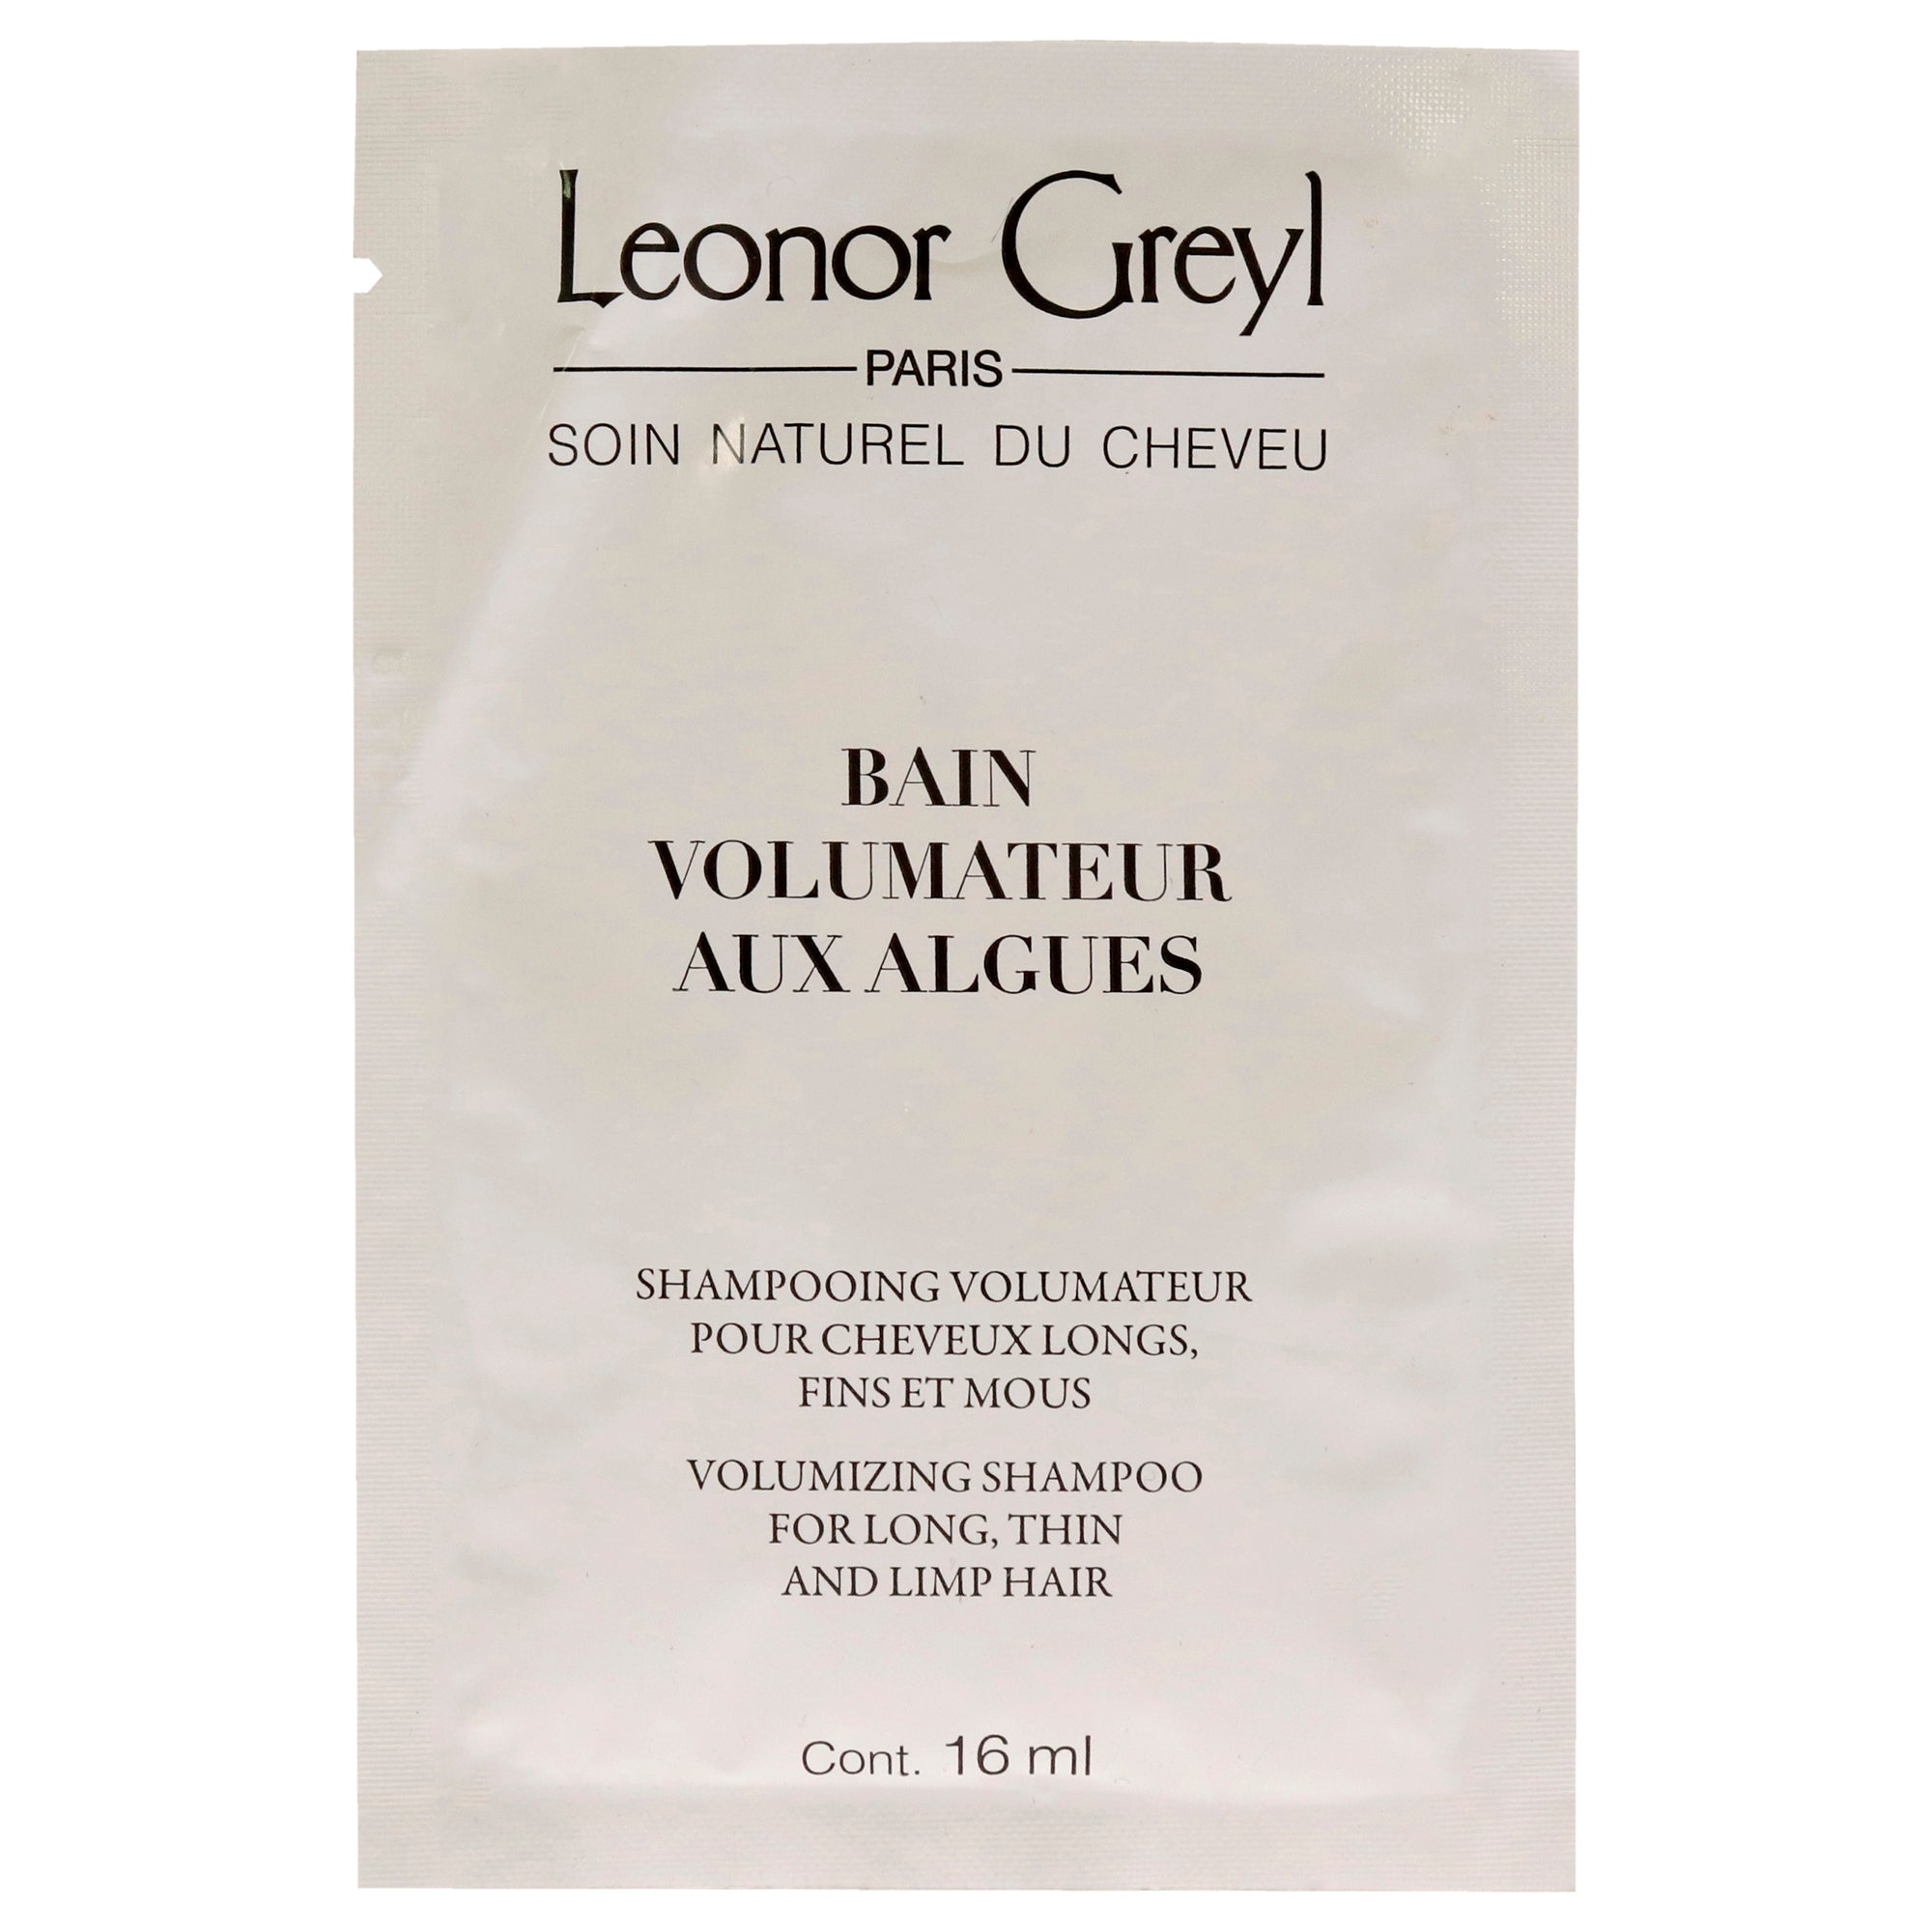 Bain Volumateur Aux Algues Shampoo by Leonor Greyl for Unisex - 0.54 oz Shampoo